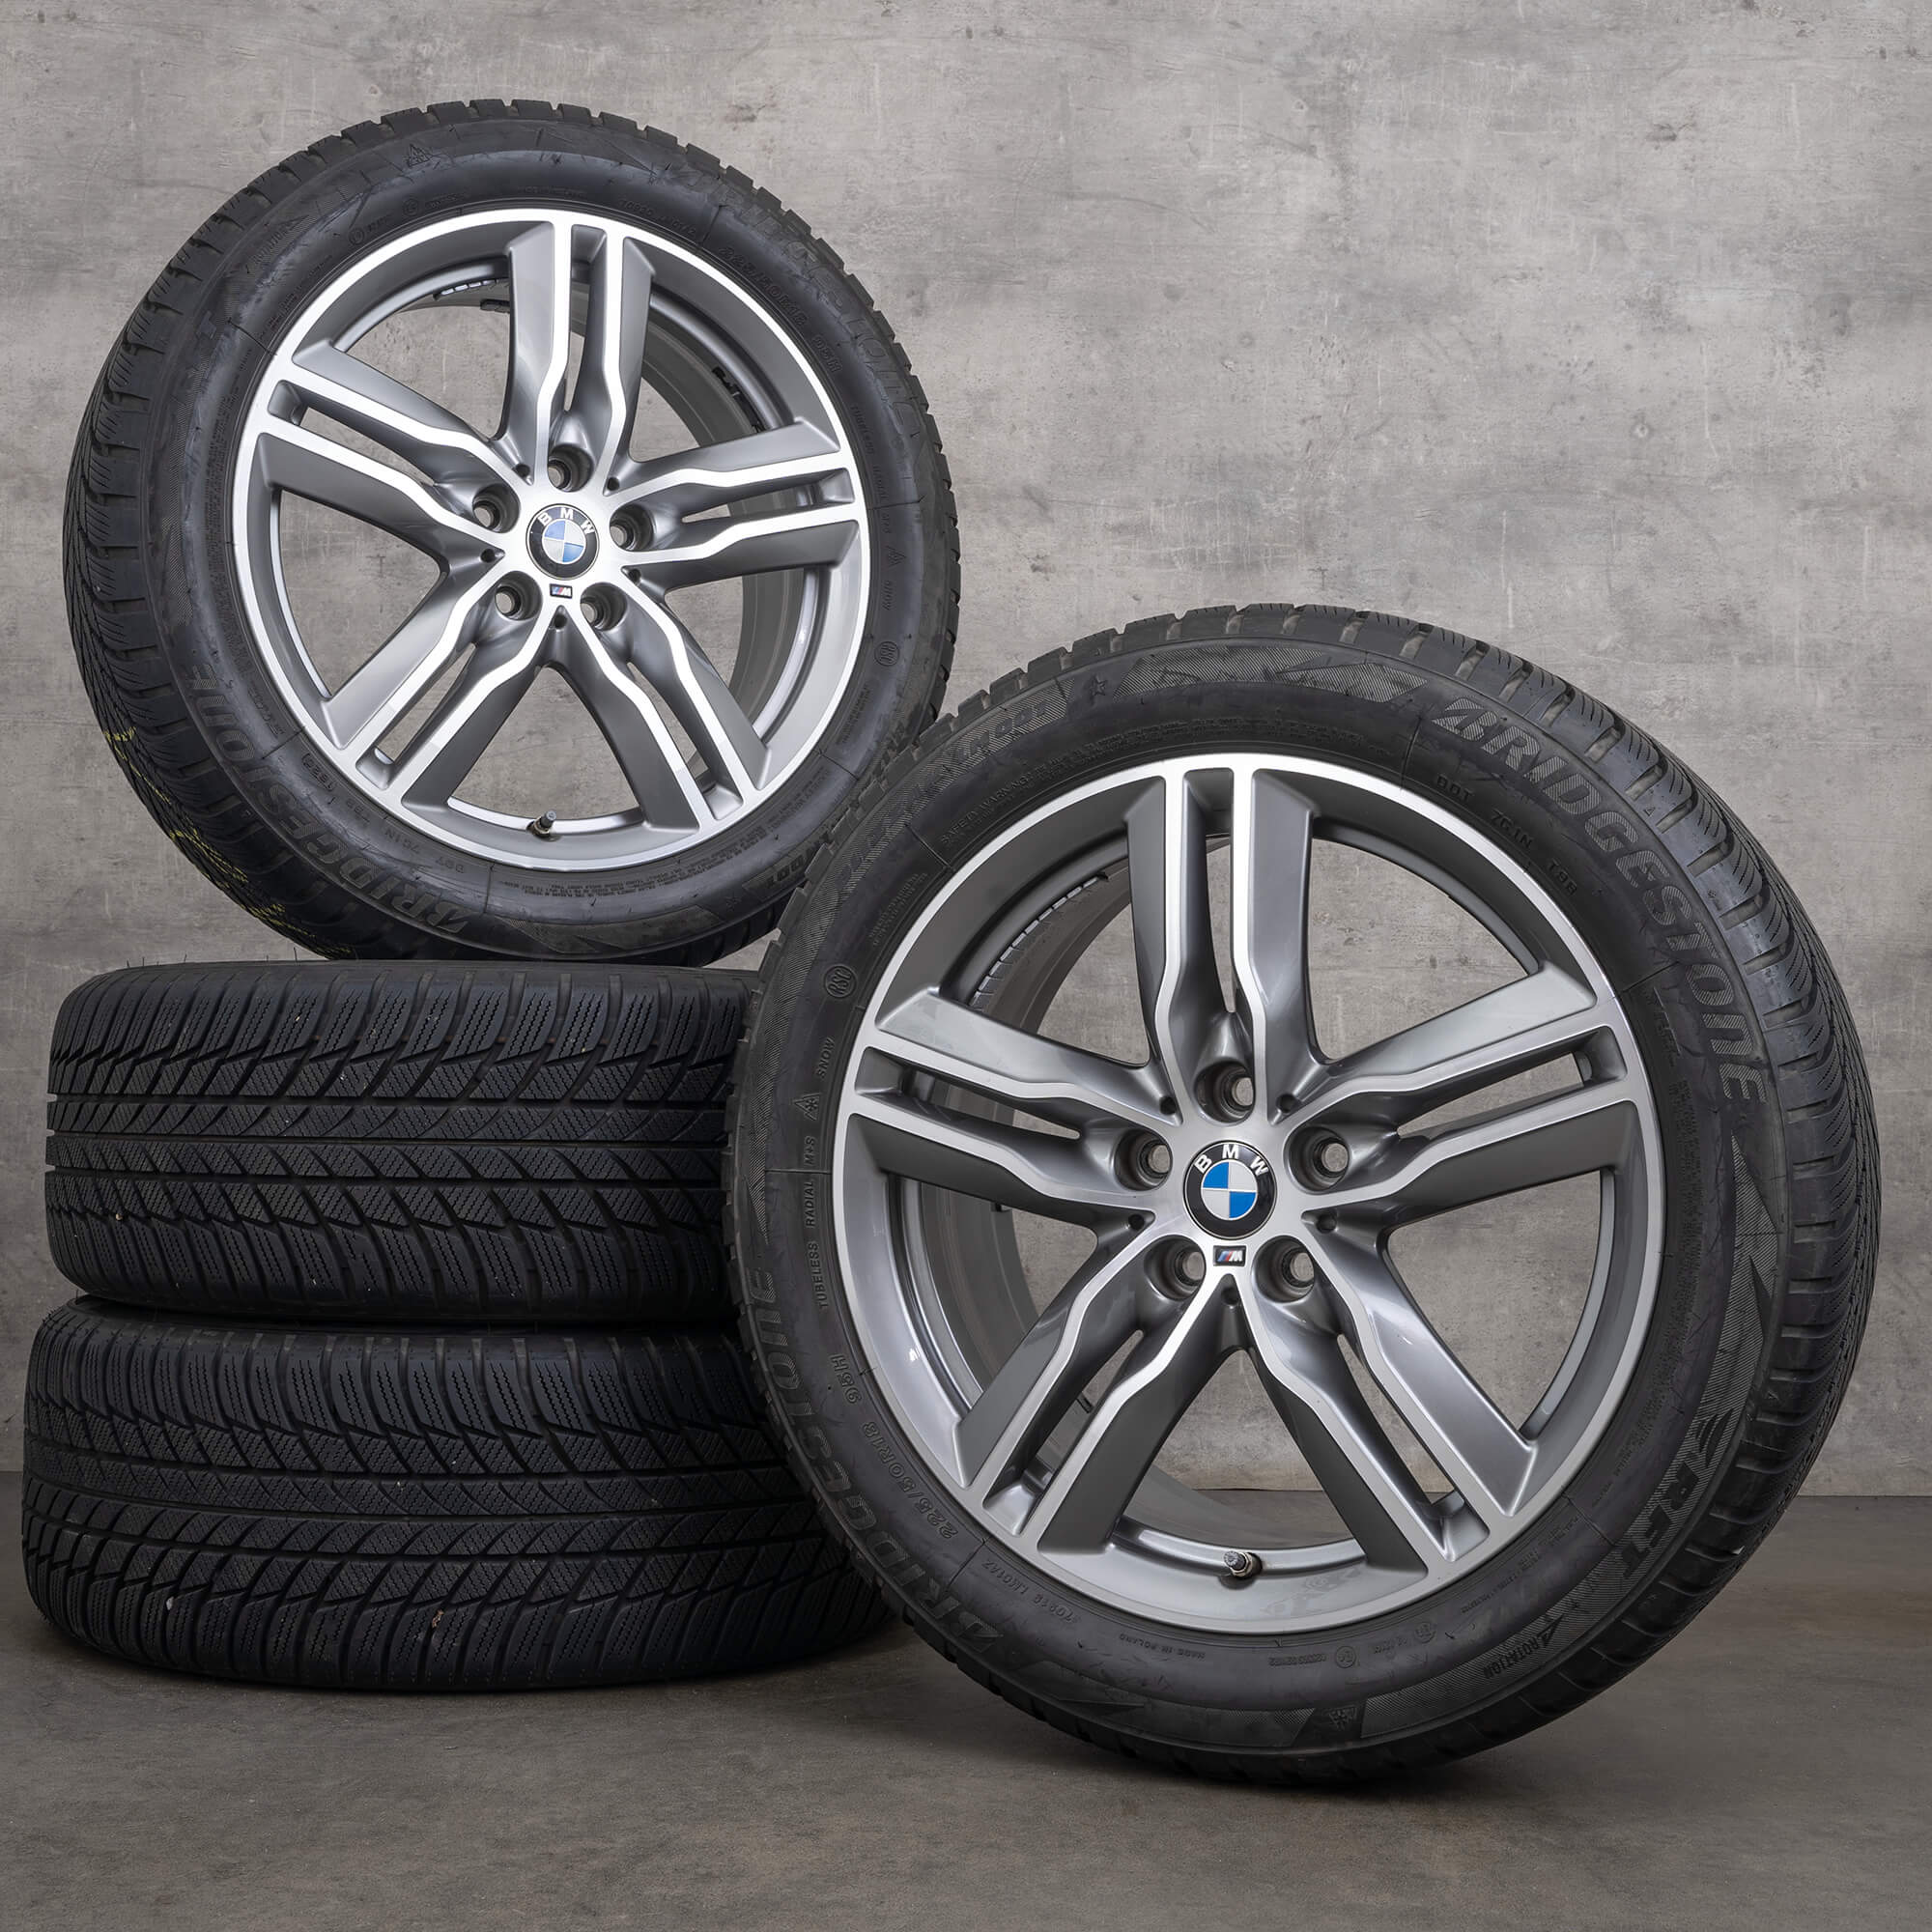 BMW X1 F48 X2 F39 winter wheels 18 inch rims tires 7850456 570 M